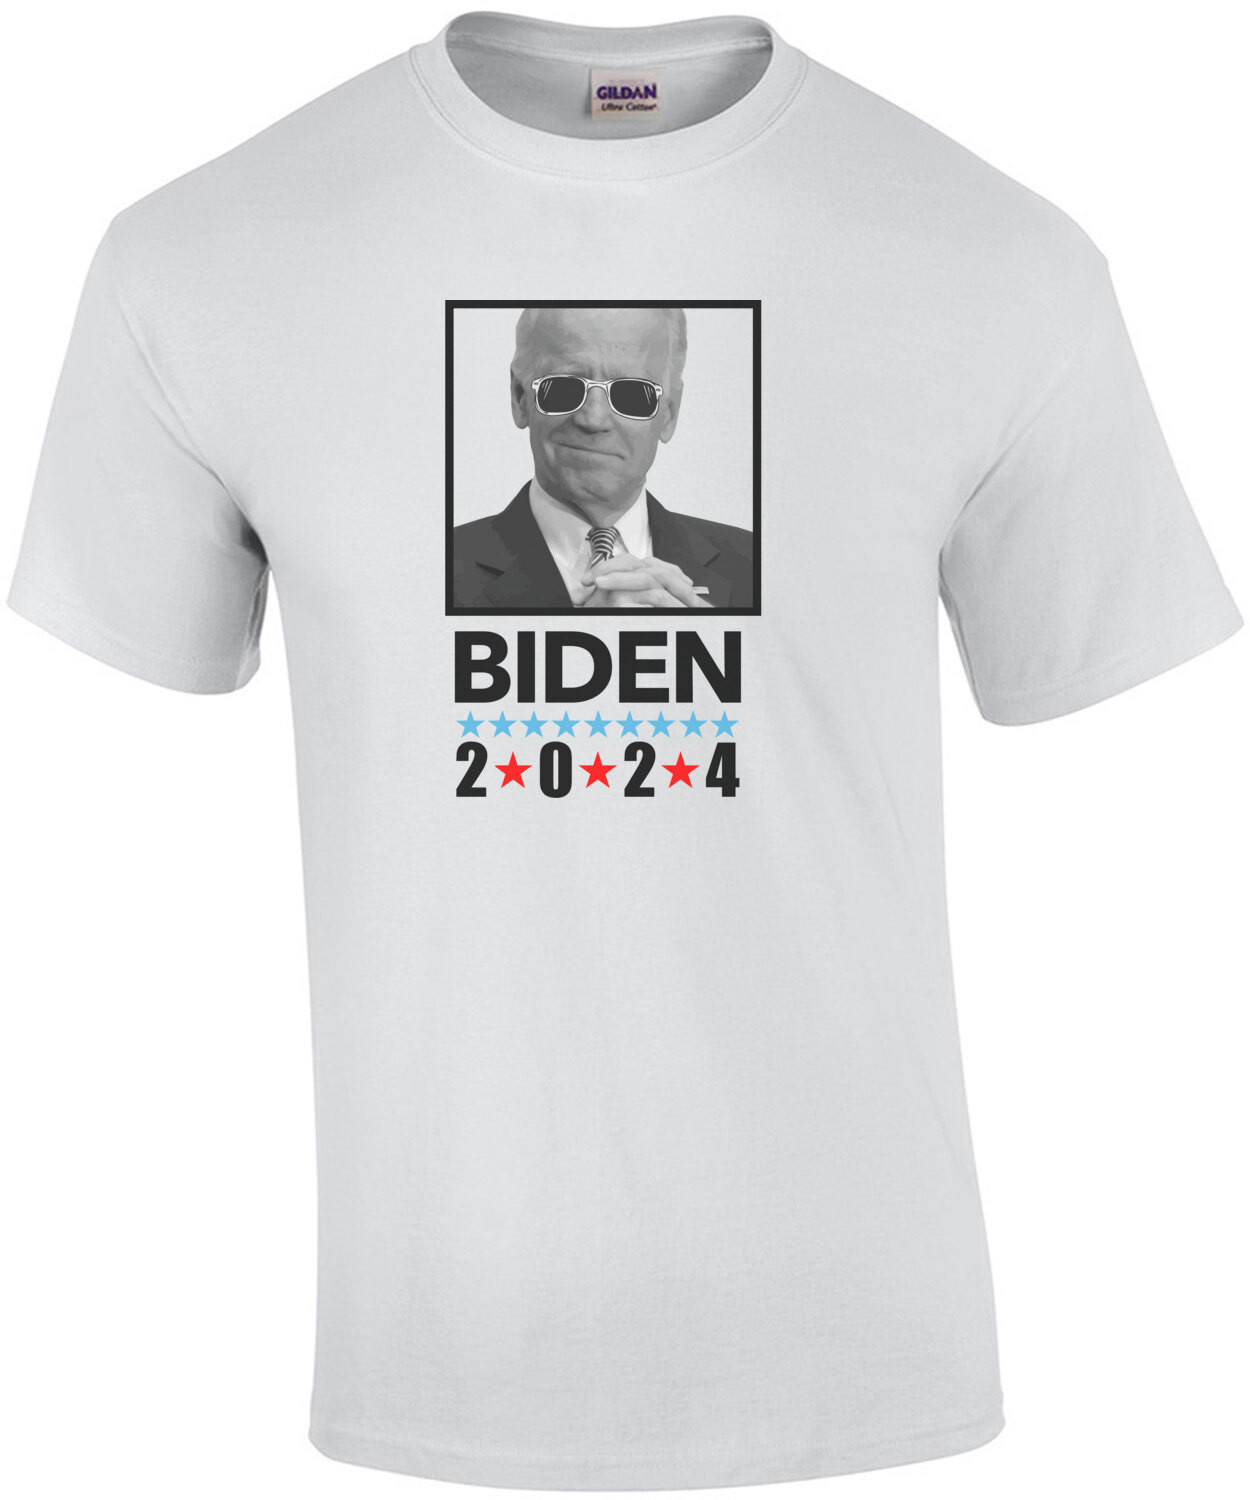 Joe Biden 2020 - 2024 Election T-Shirt